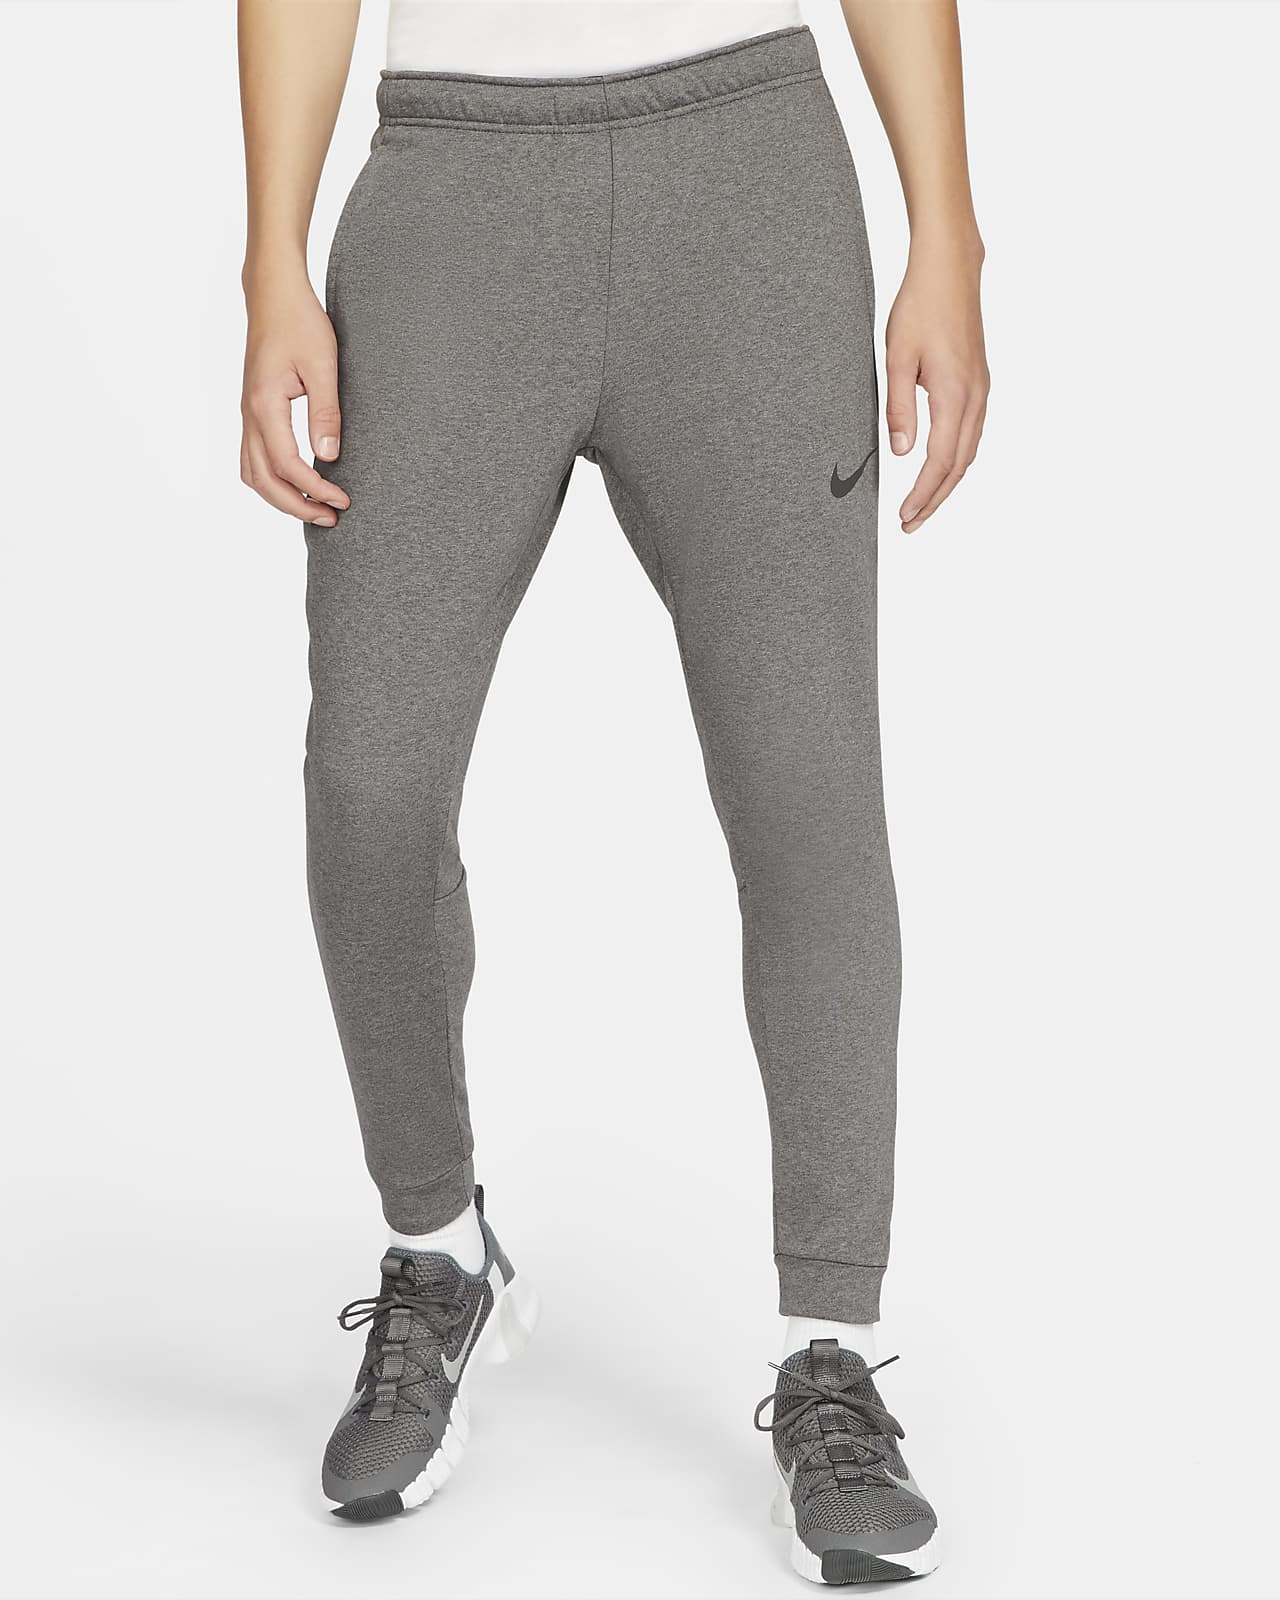 Men's Dri-FIT Taper Fitness Fleece Pants.